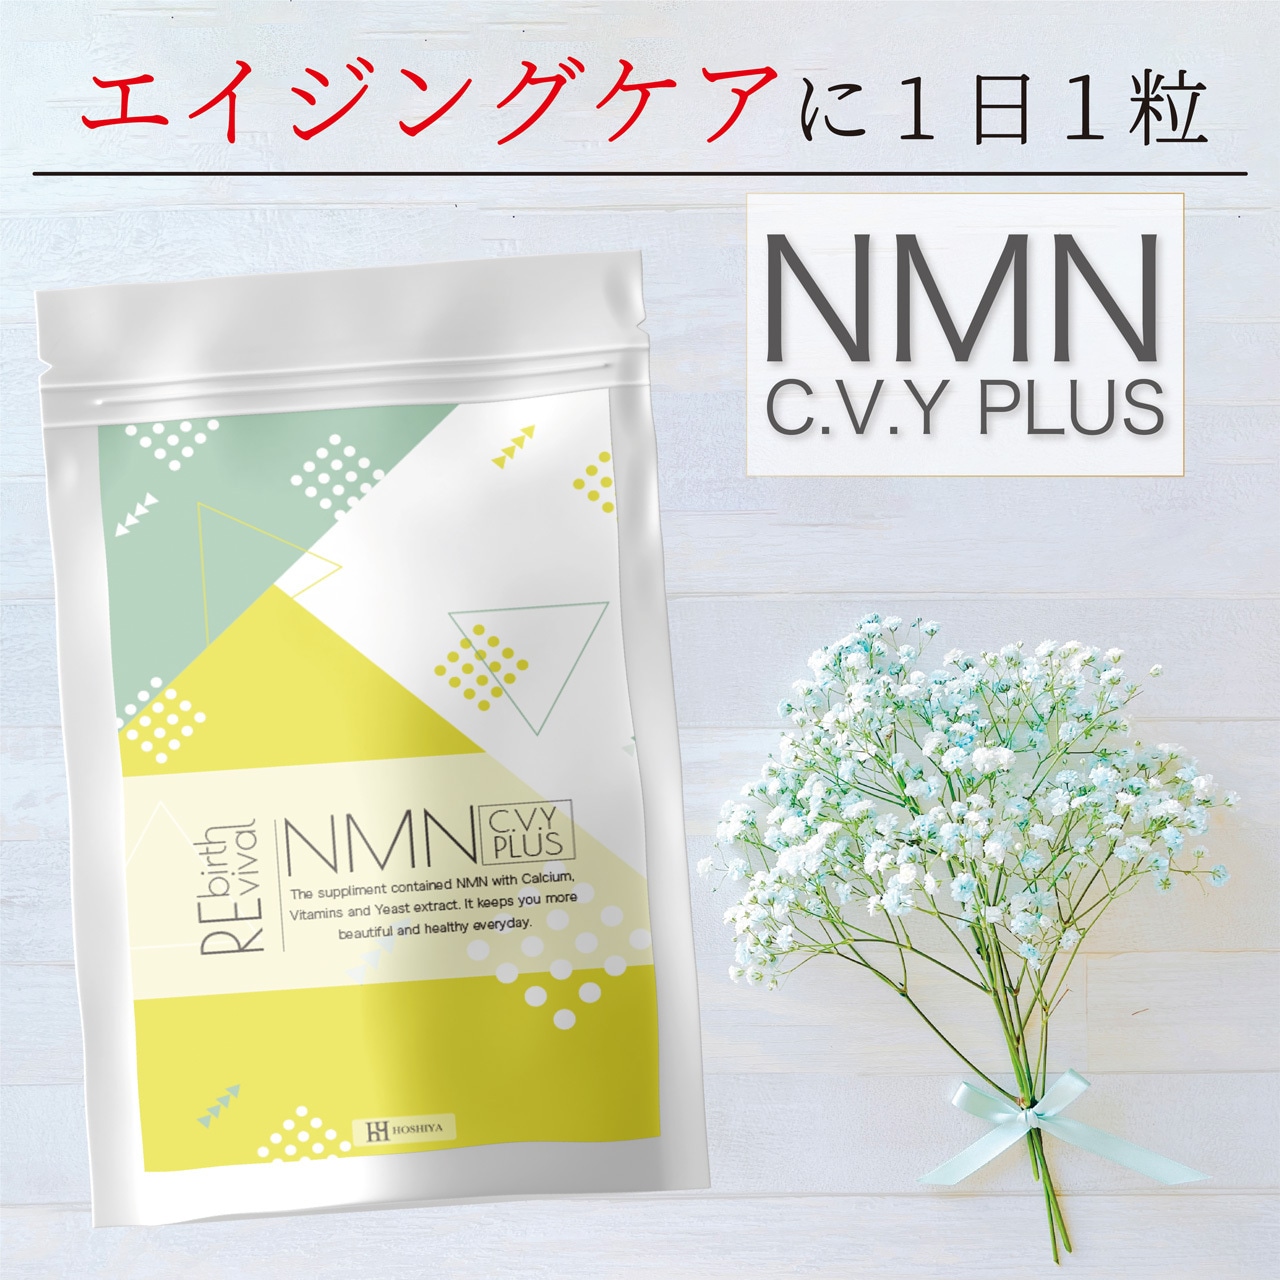 NMN C.V.Y PLUS